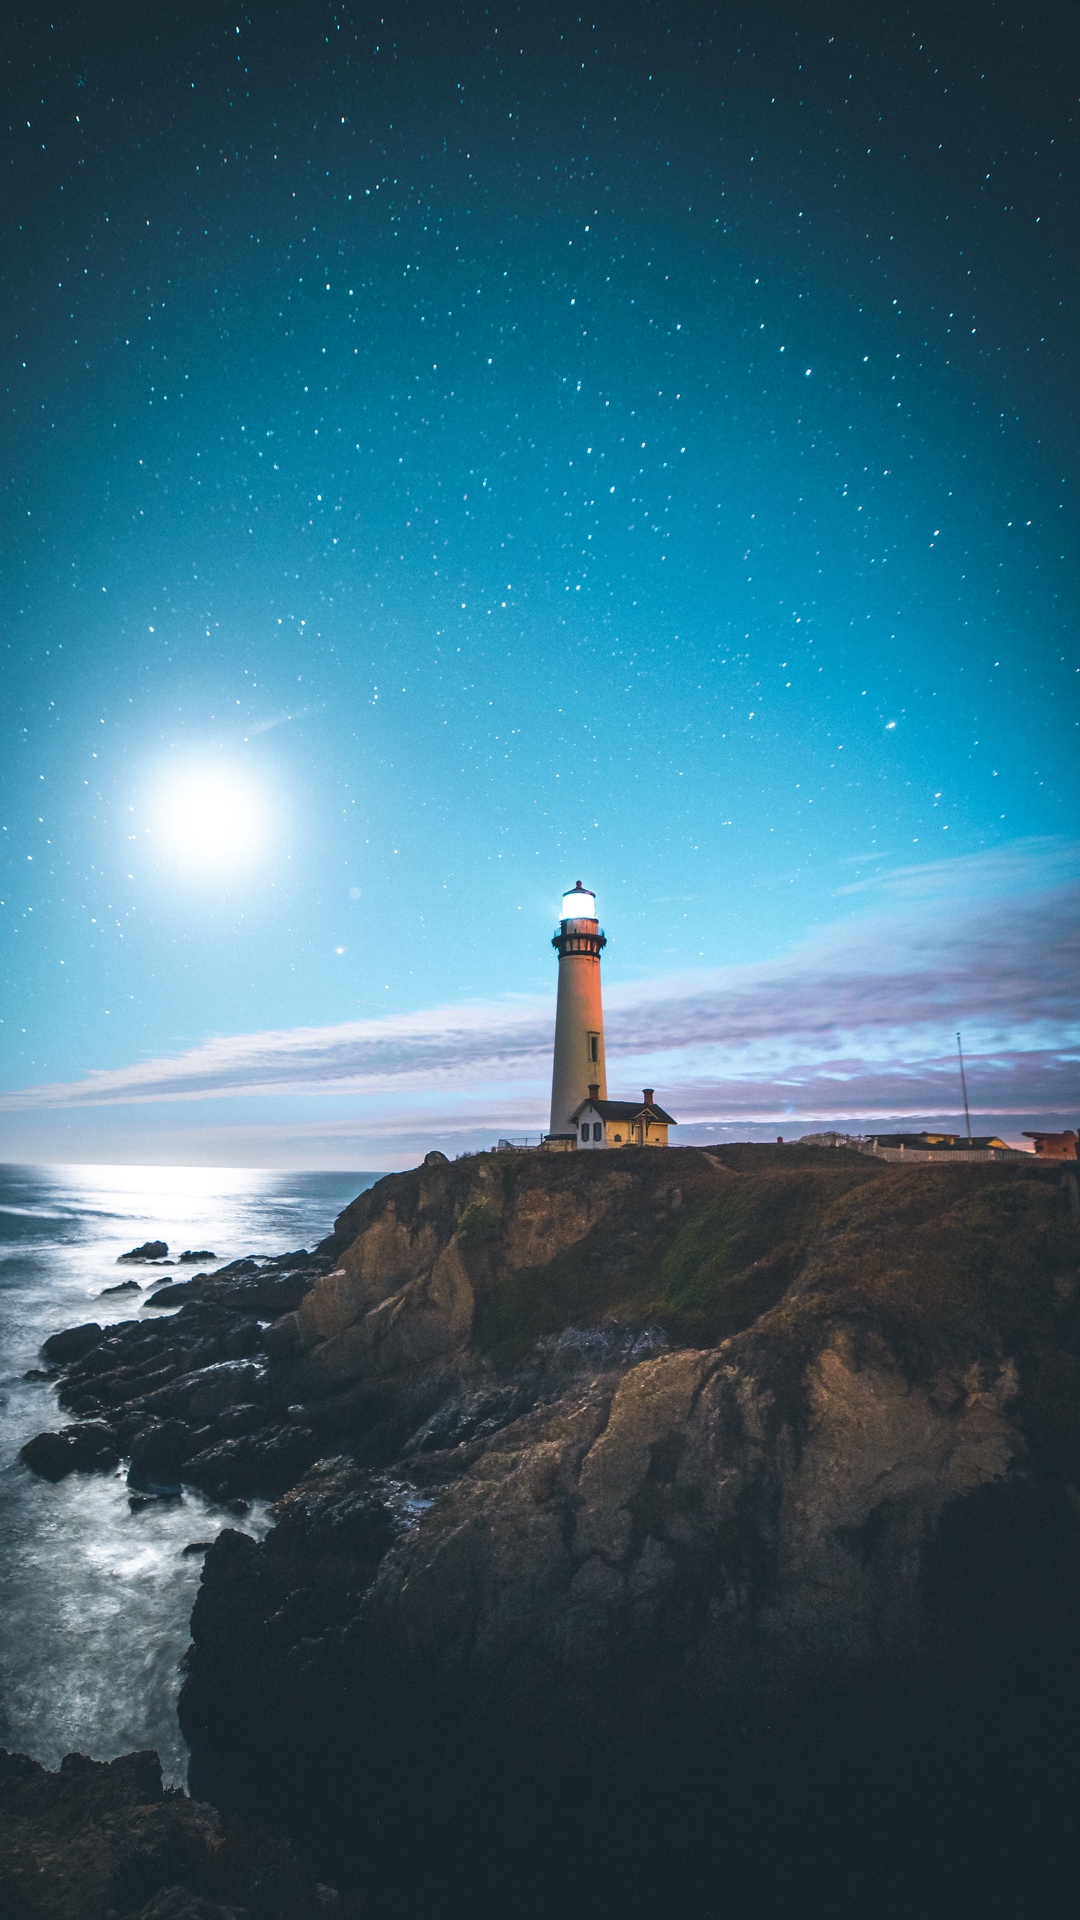 Lighthouse Starry Sky Wallpaper - Goals And Intentions - HD Wallpaper 